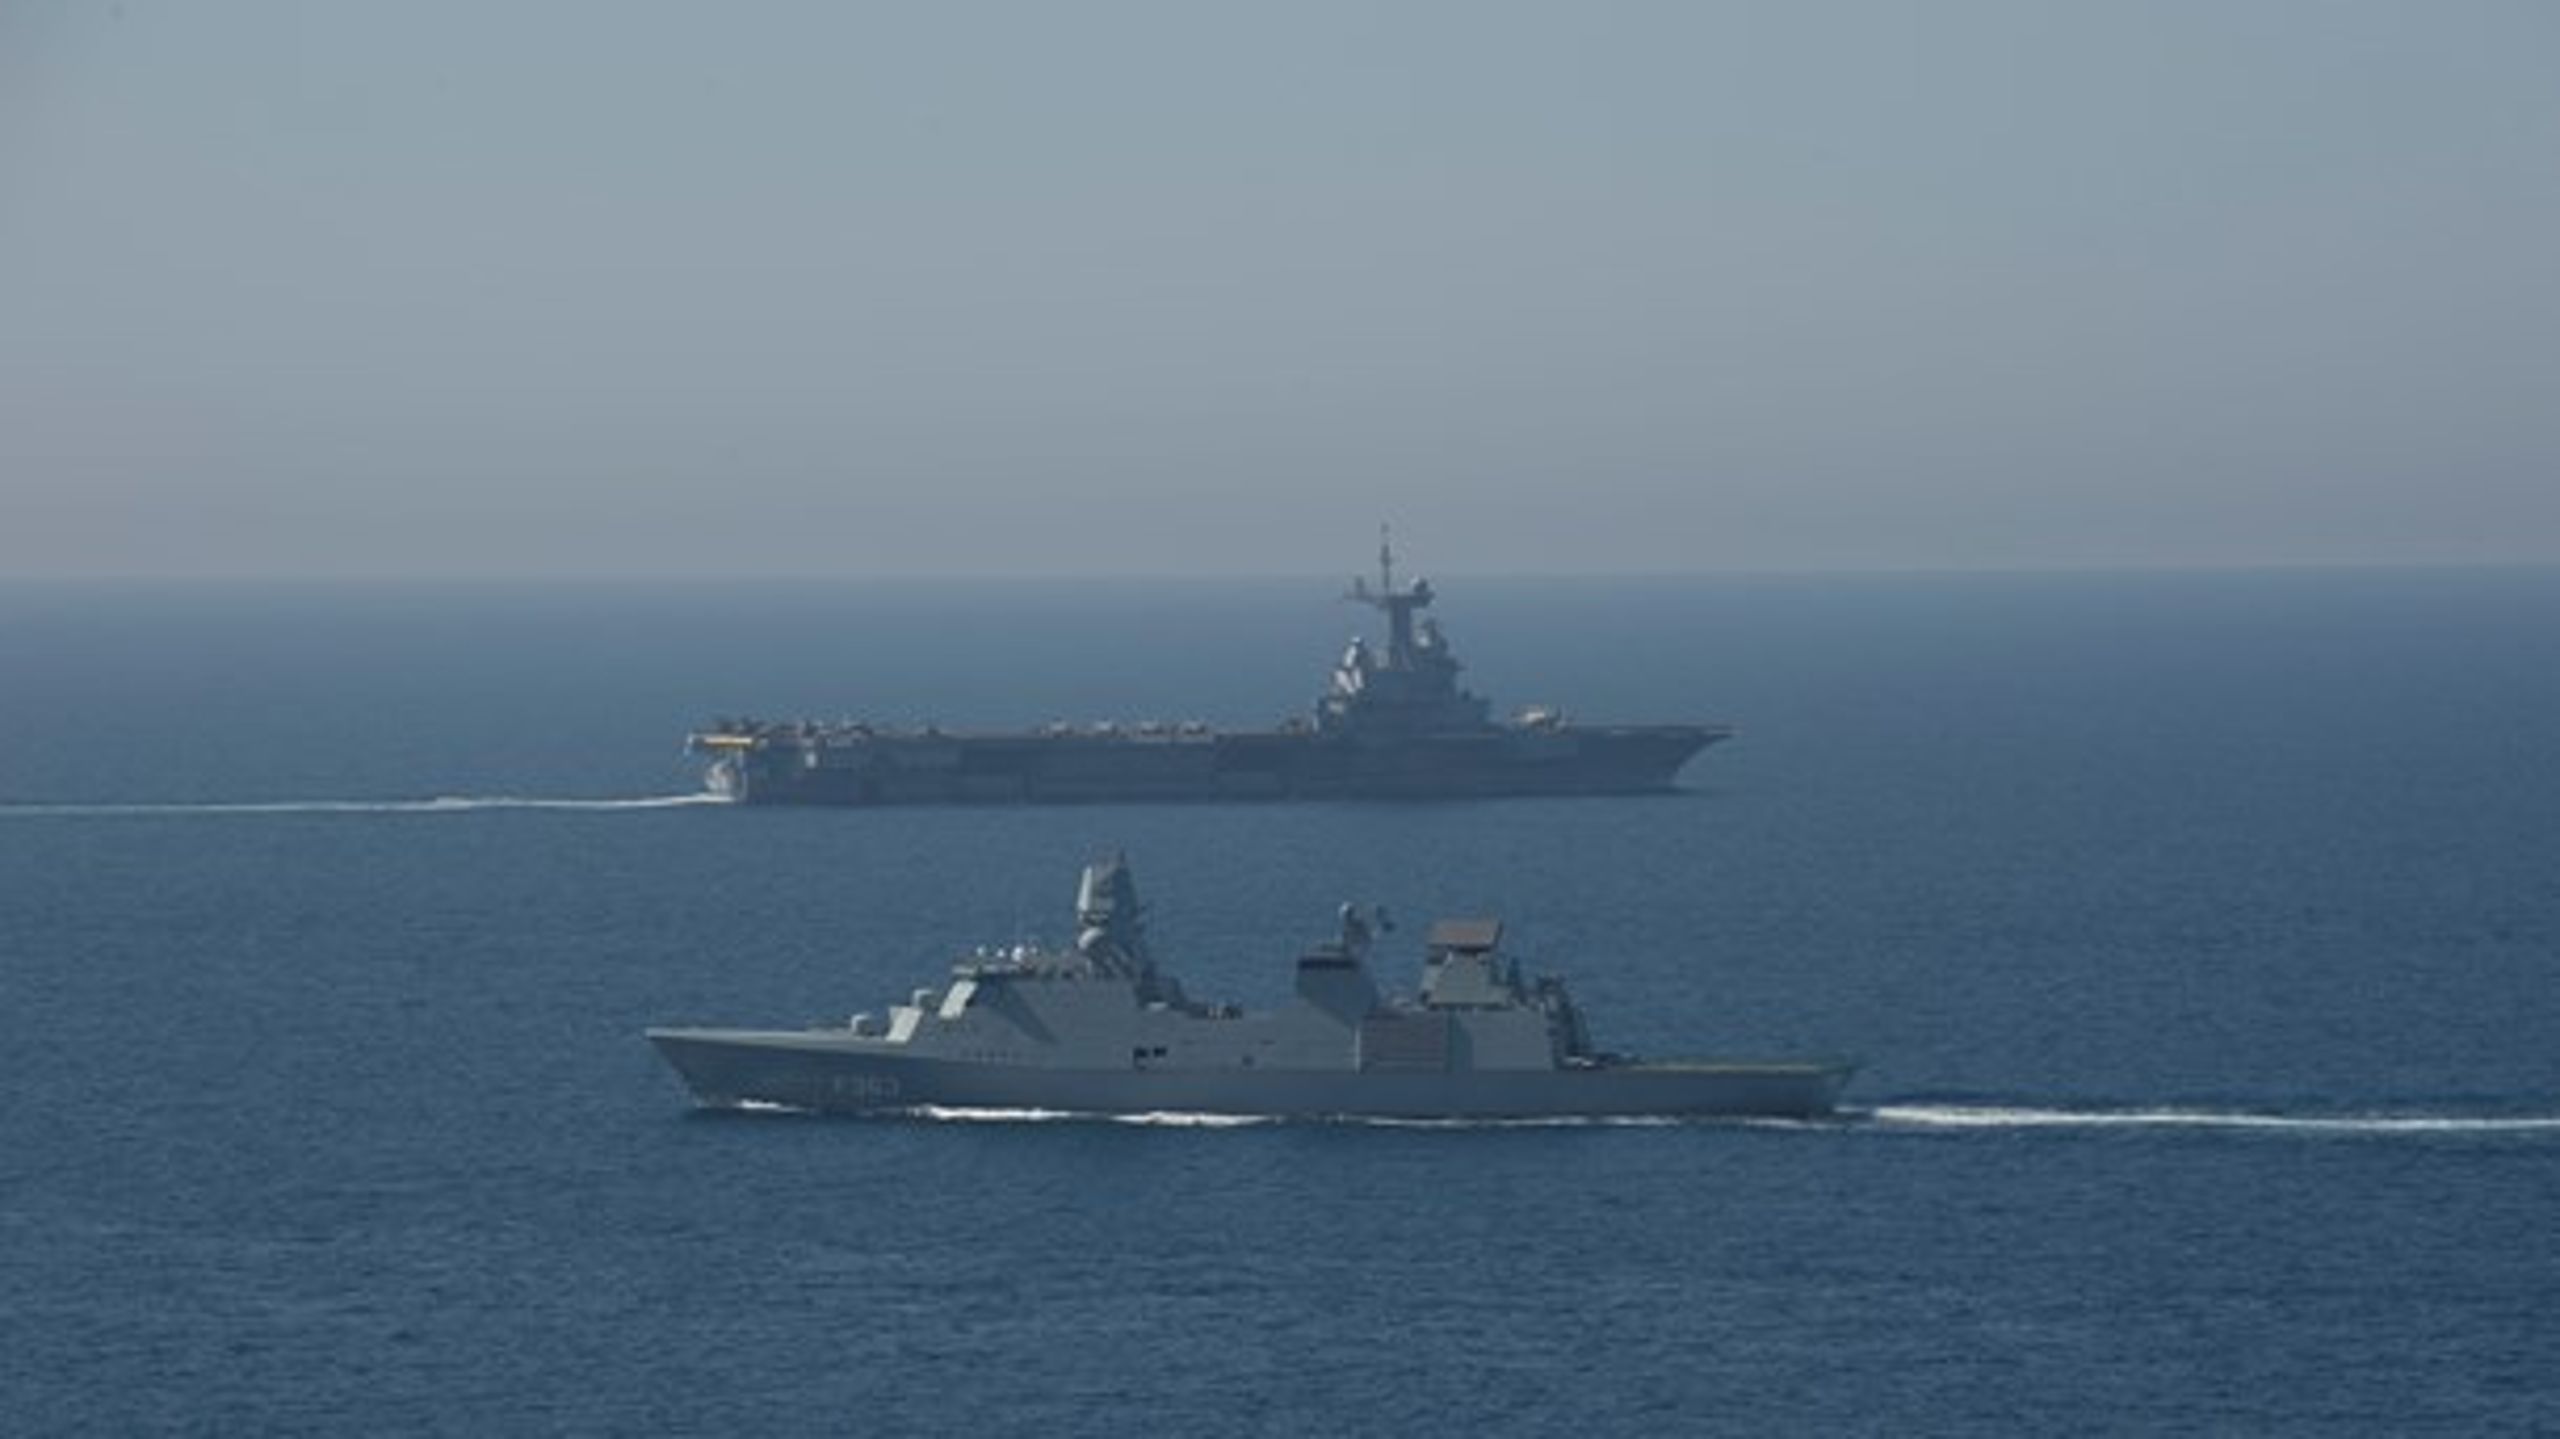 Den danske fregat Niels Juel og det franske hangarskib Charles de Gaulle på patrulje sammen i Middelhavet i 2019.